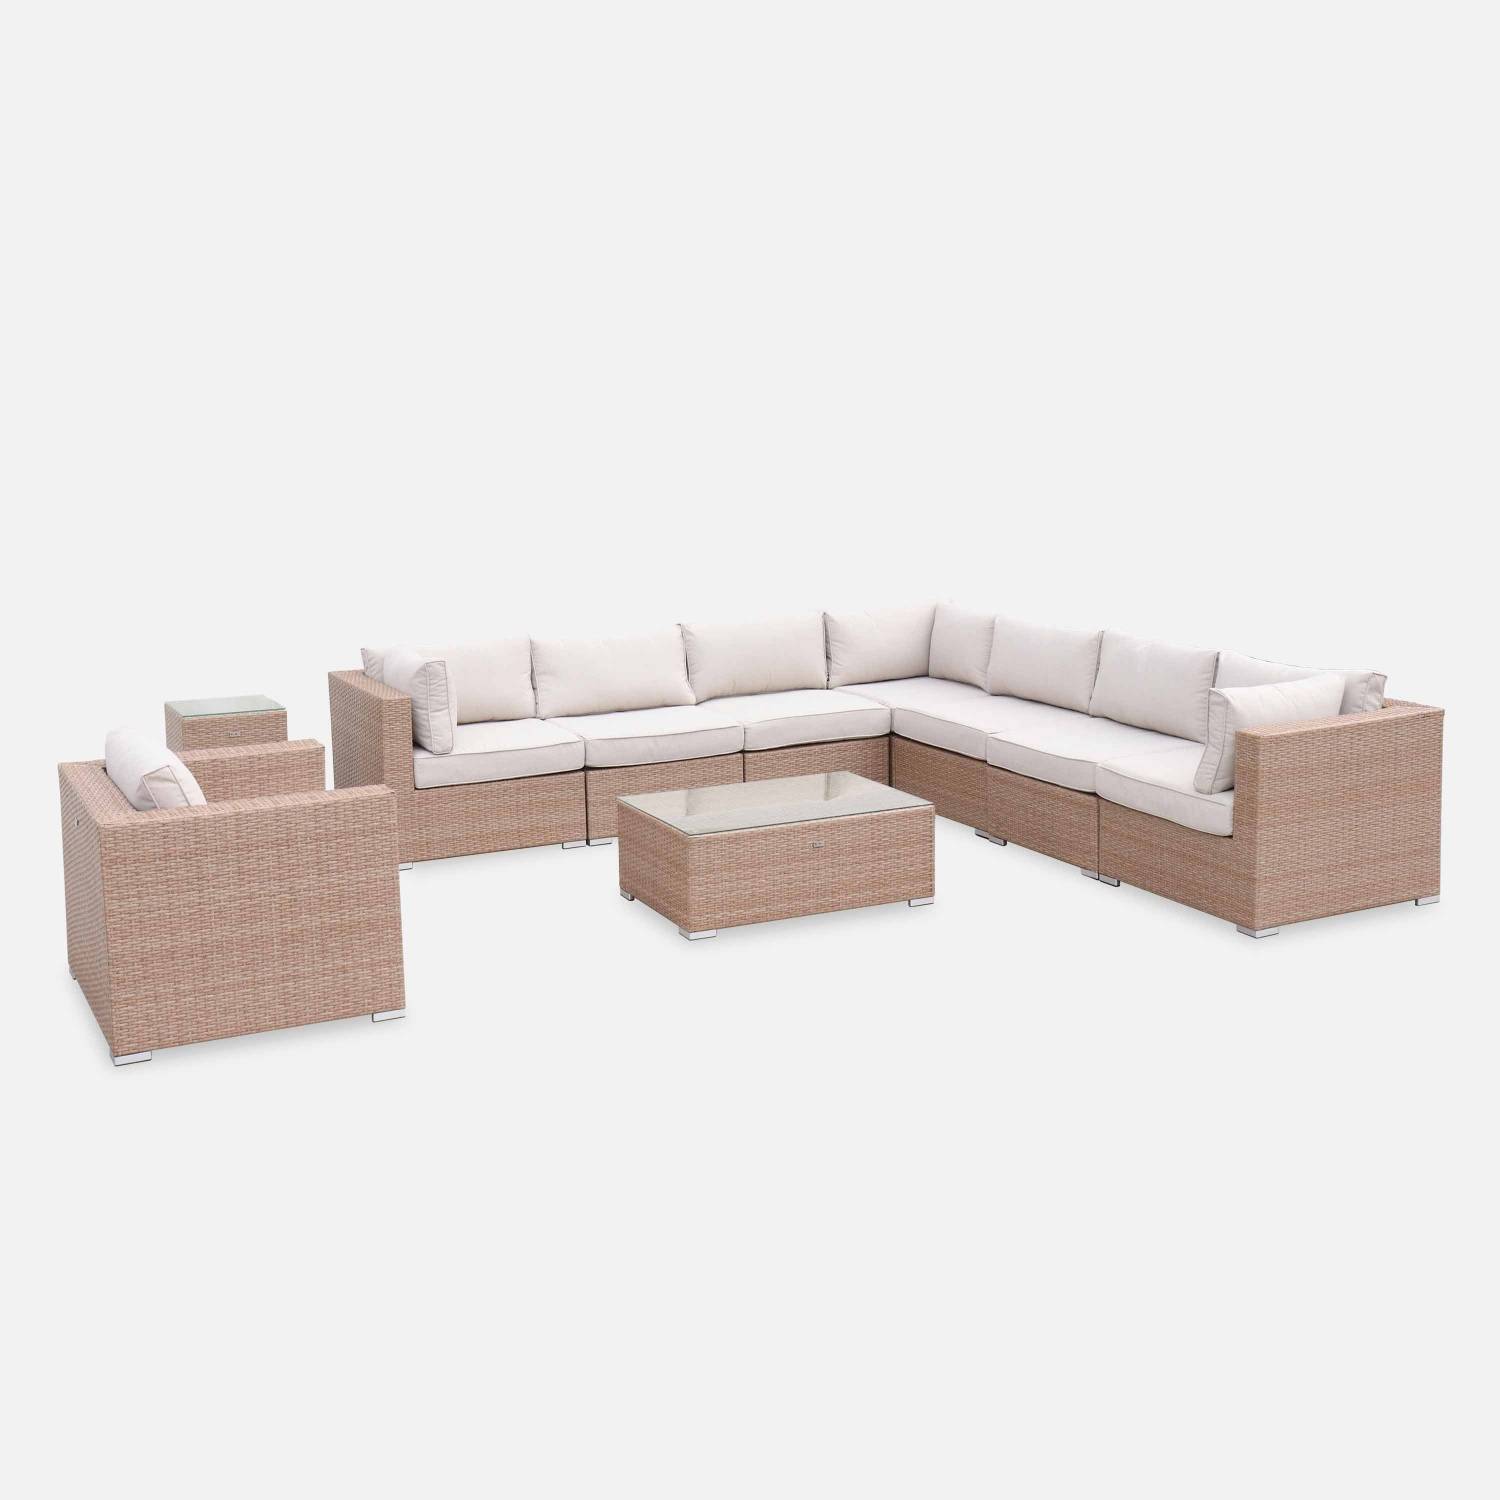 Wicker loungeset 8 elementen - VENEZIA - 10 plaatsen - modulair- aluminium frame en dikke kussens - beige/beige | sweeek